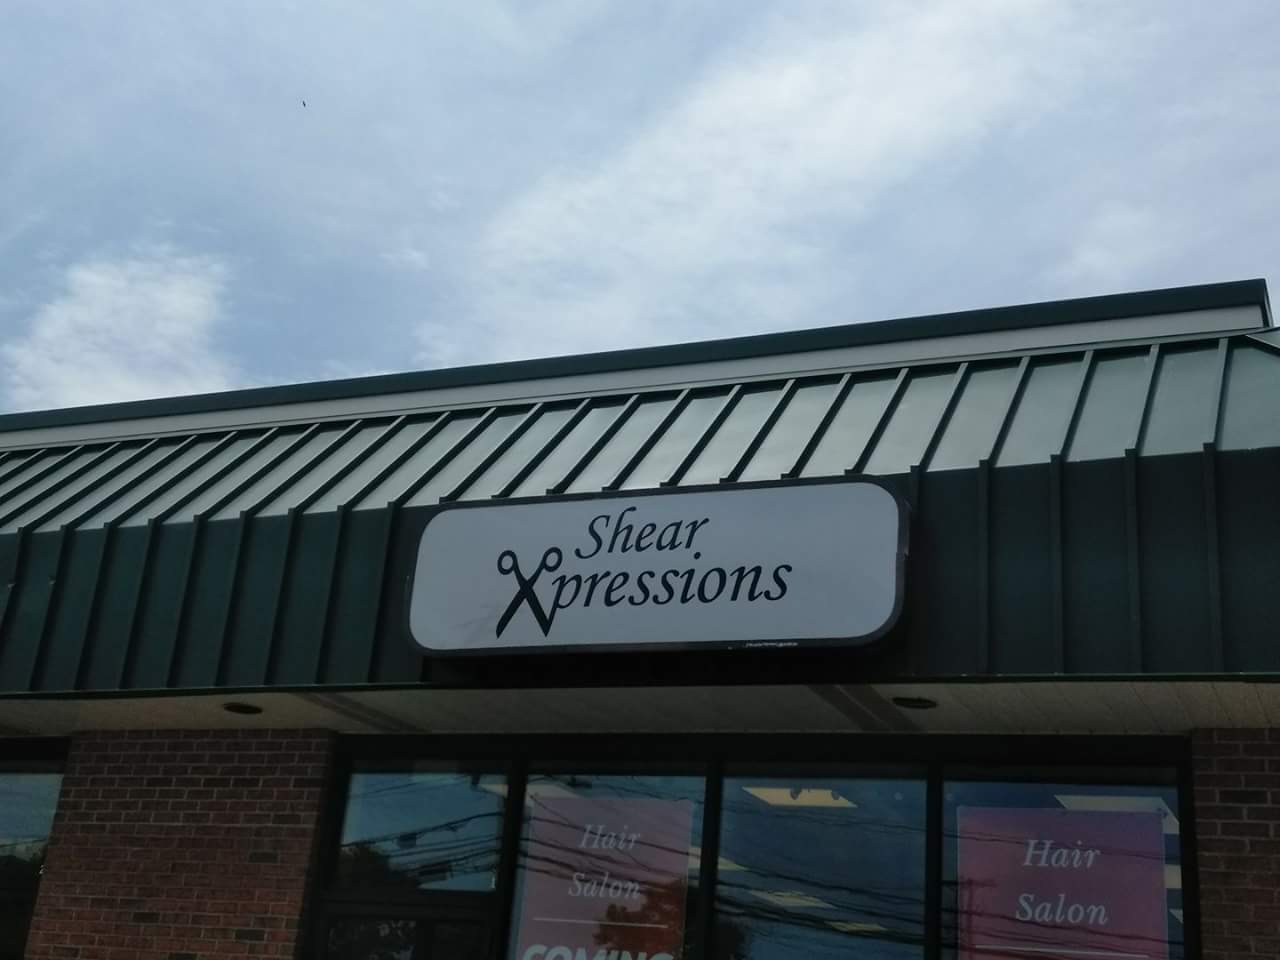 Shear Xpressions